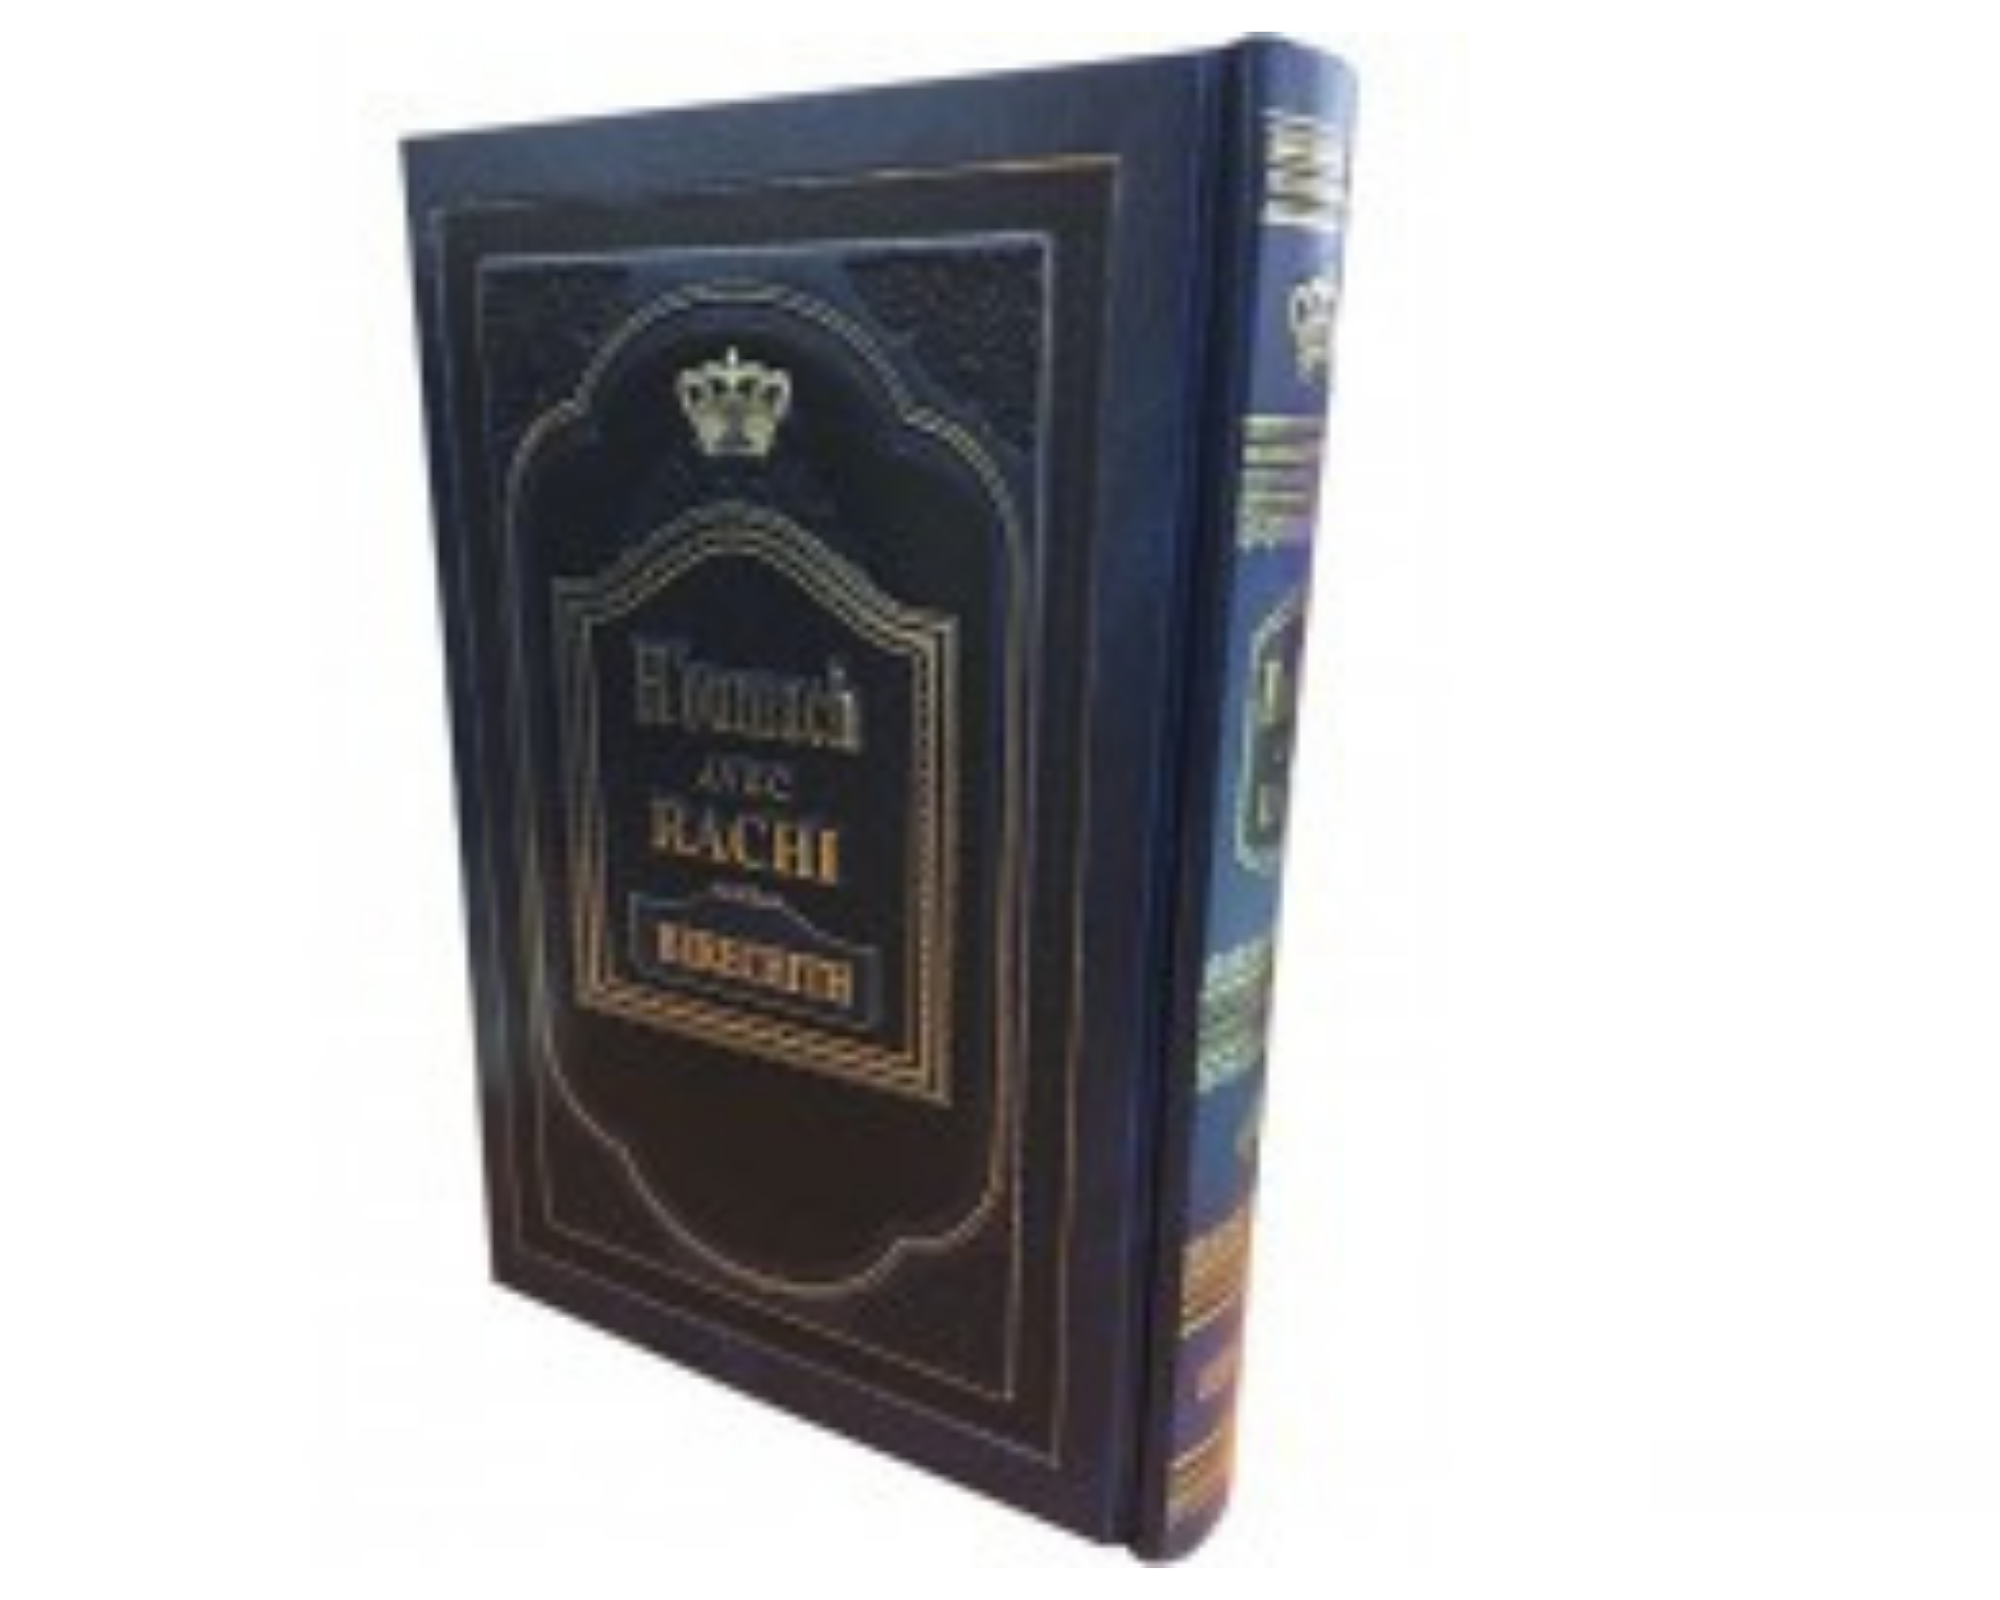 houmach-rachi-berechit-anaelle-judaica